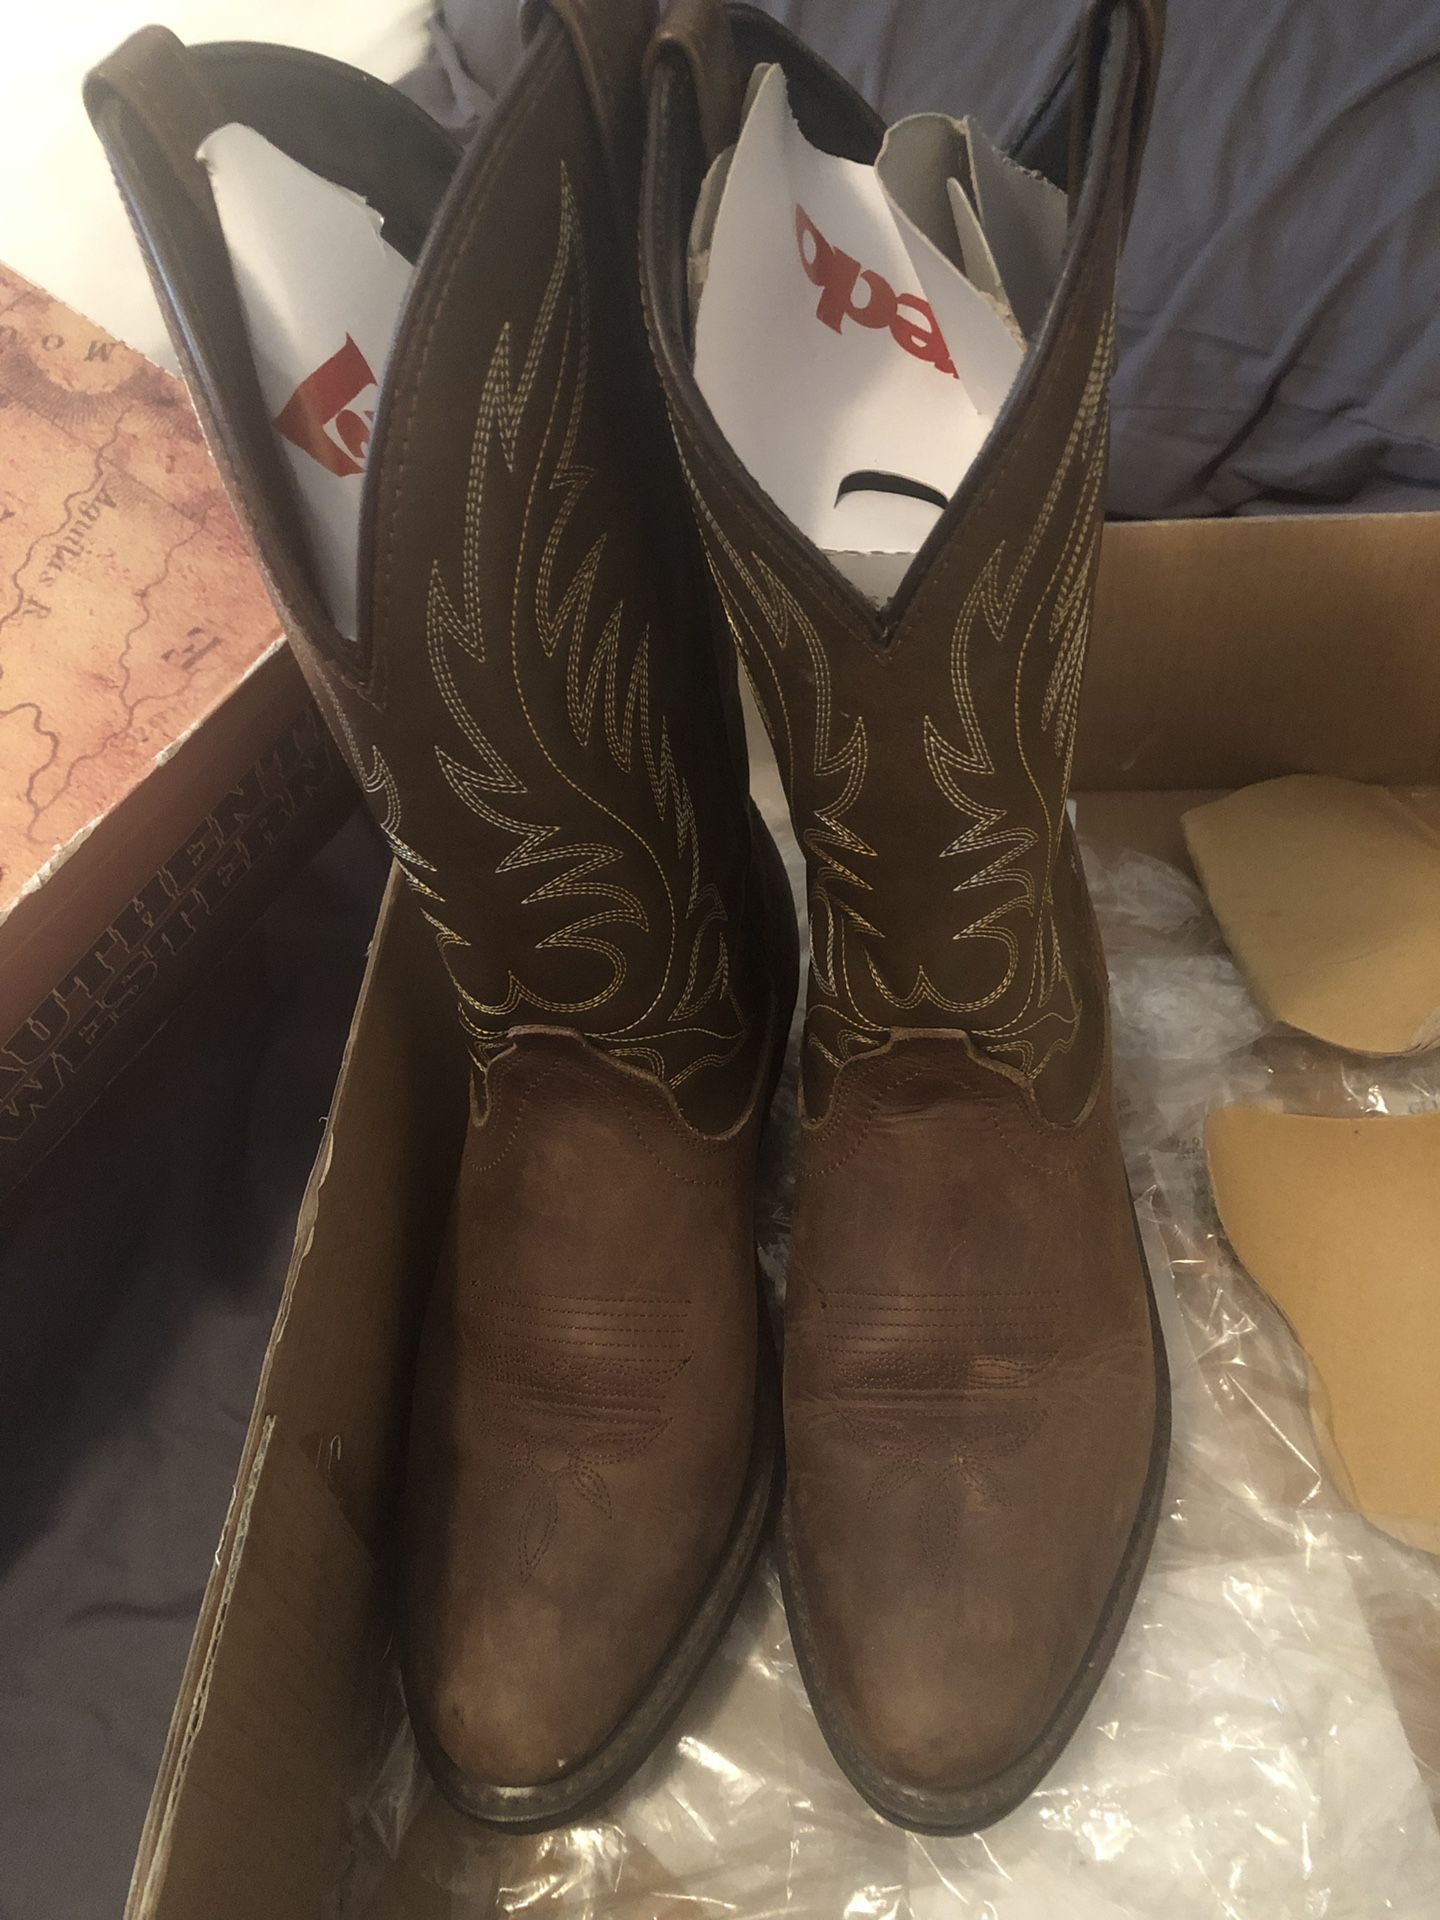 Women’s Laredo boots size 7.5